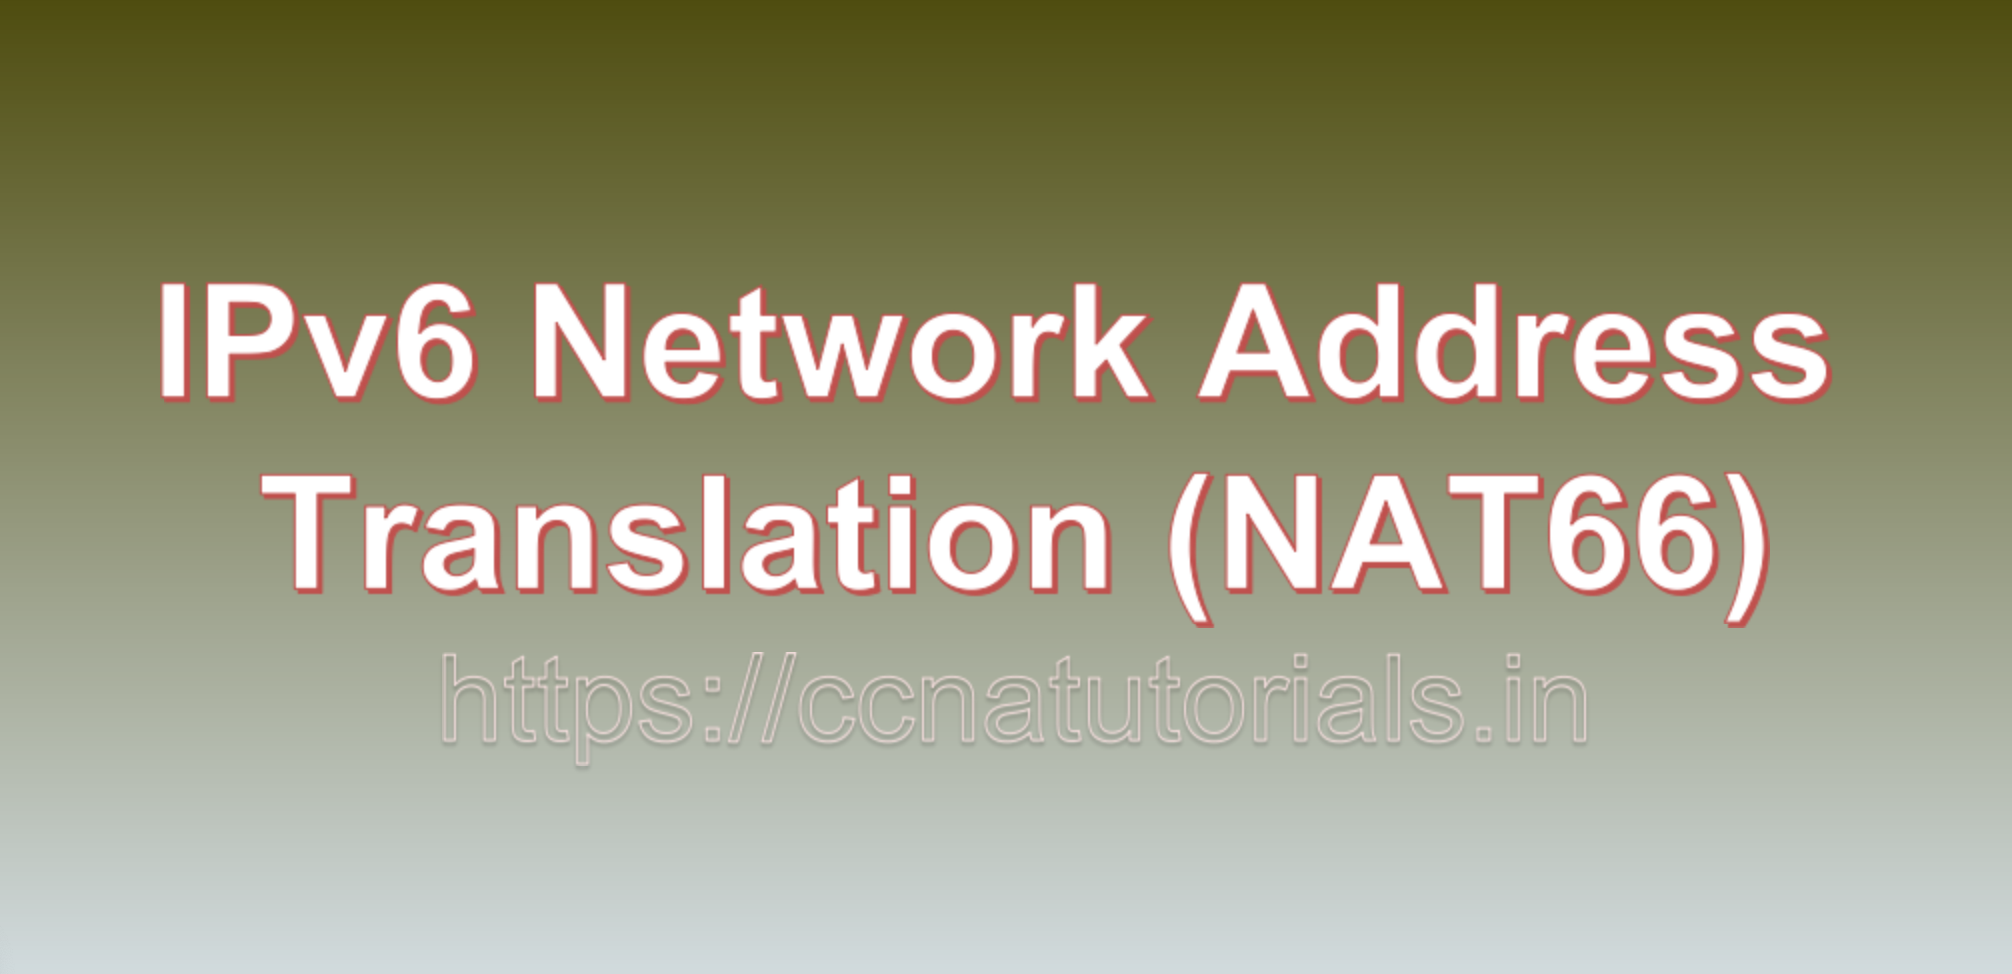 IPv6 Network Address Translation (NAT66), ccna, ccna tutorials